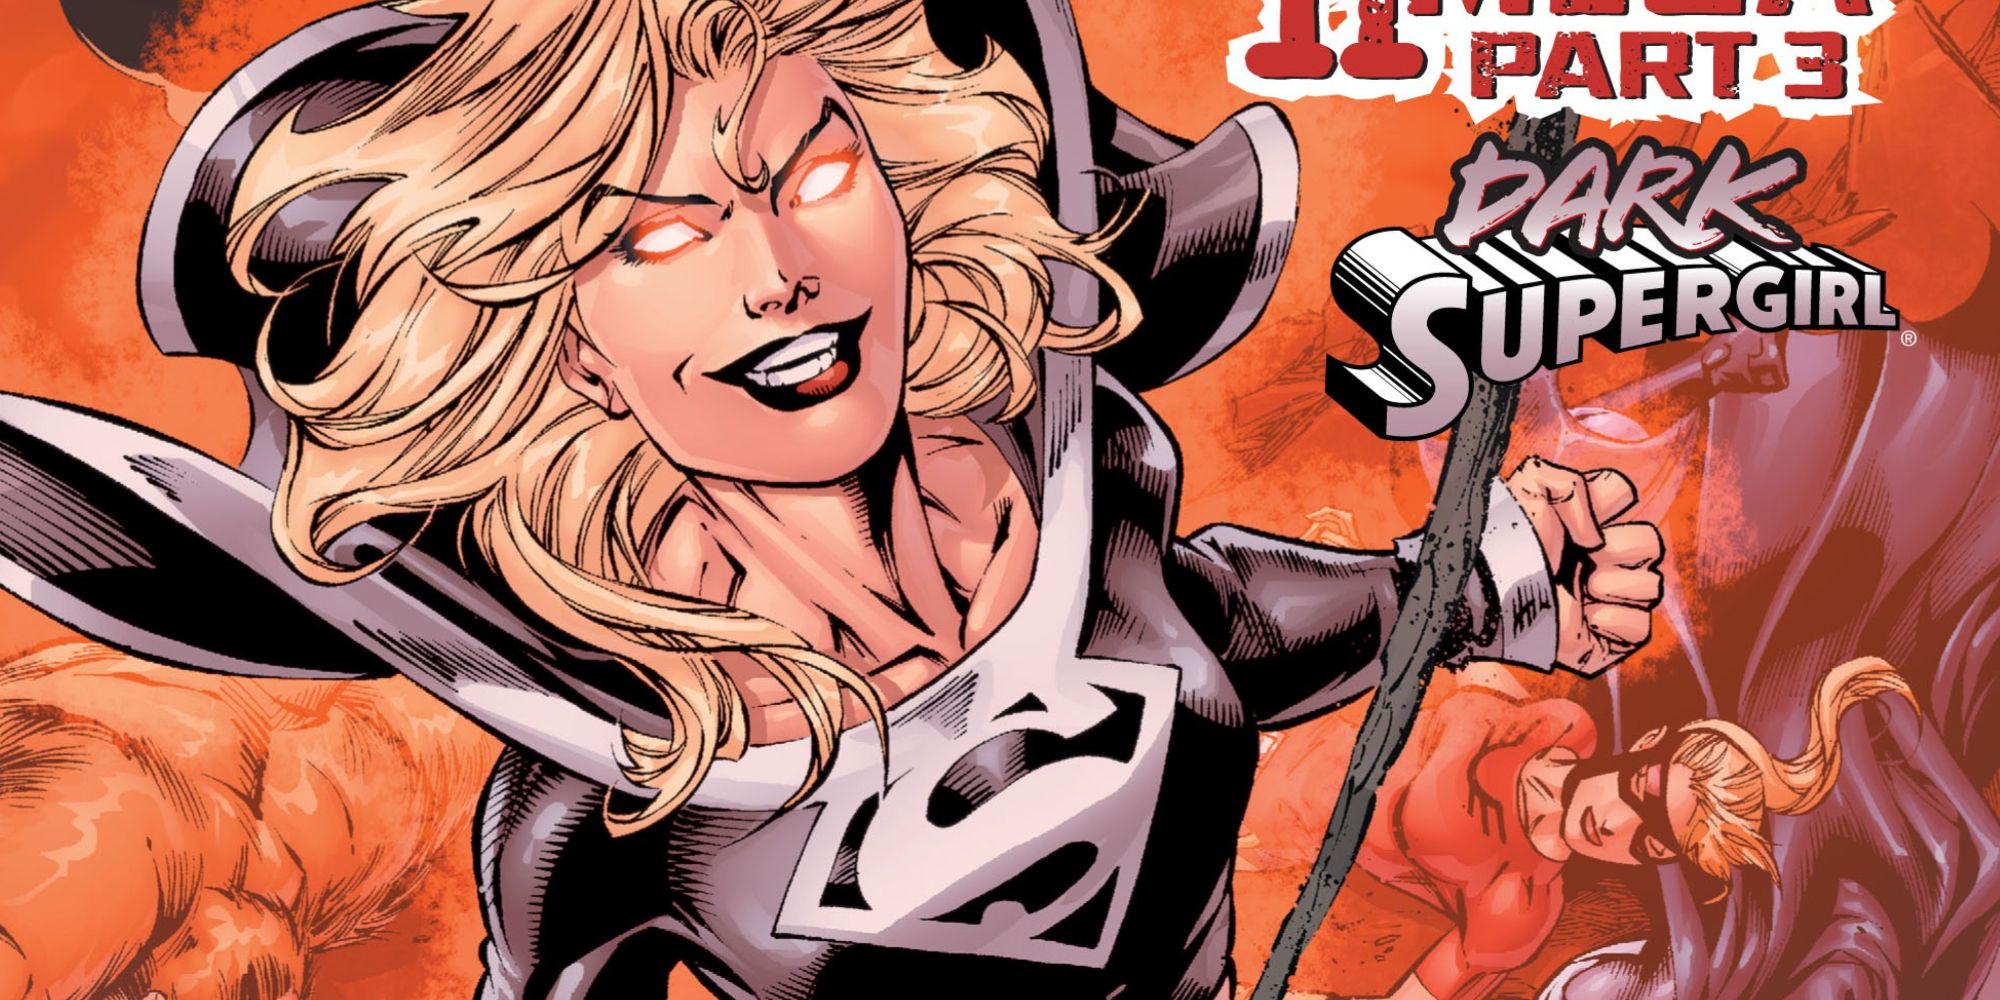 Dark Supergirl ataca na DC Comics.